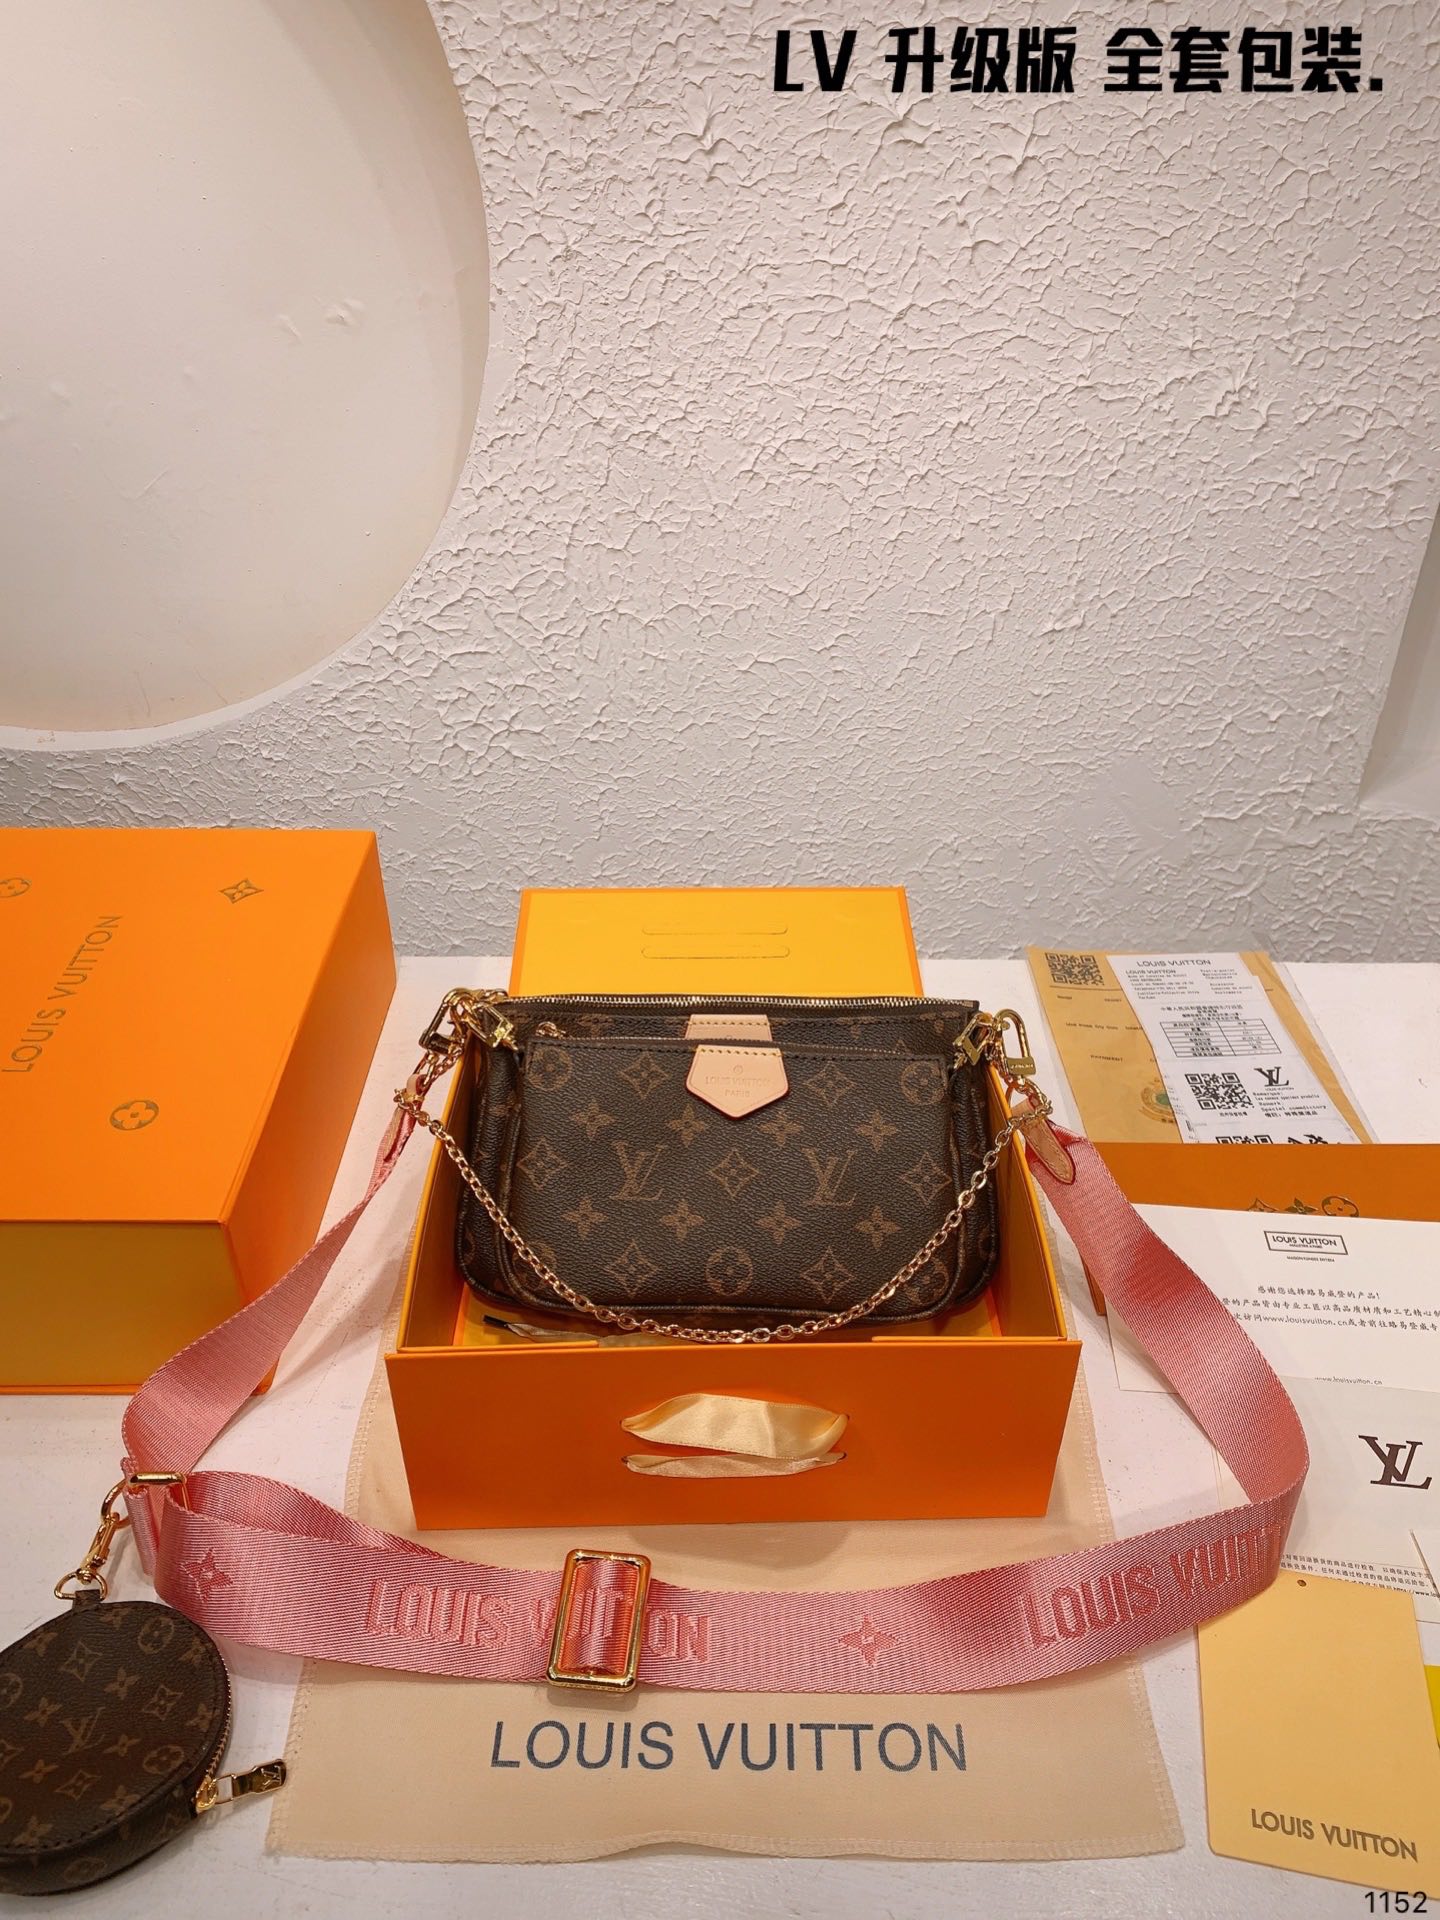 LV Louis Vuitton Handbags 3 In 1